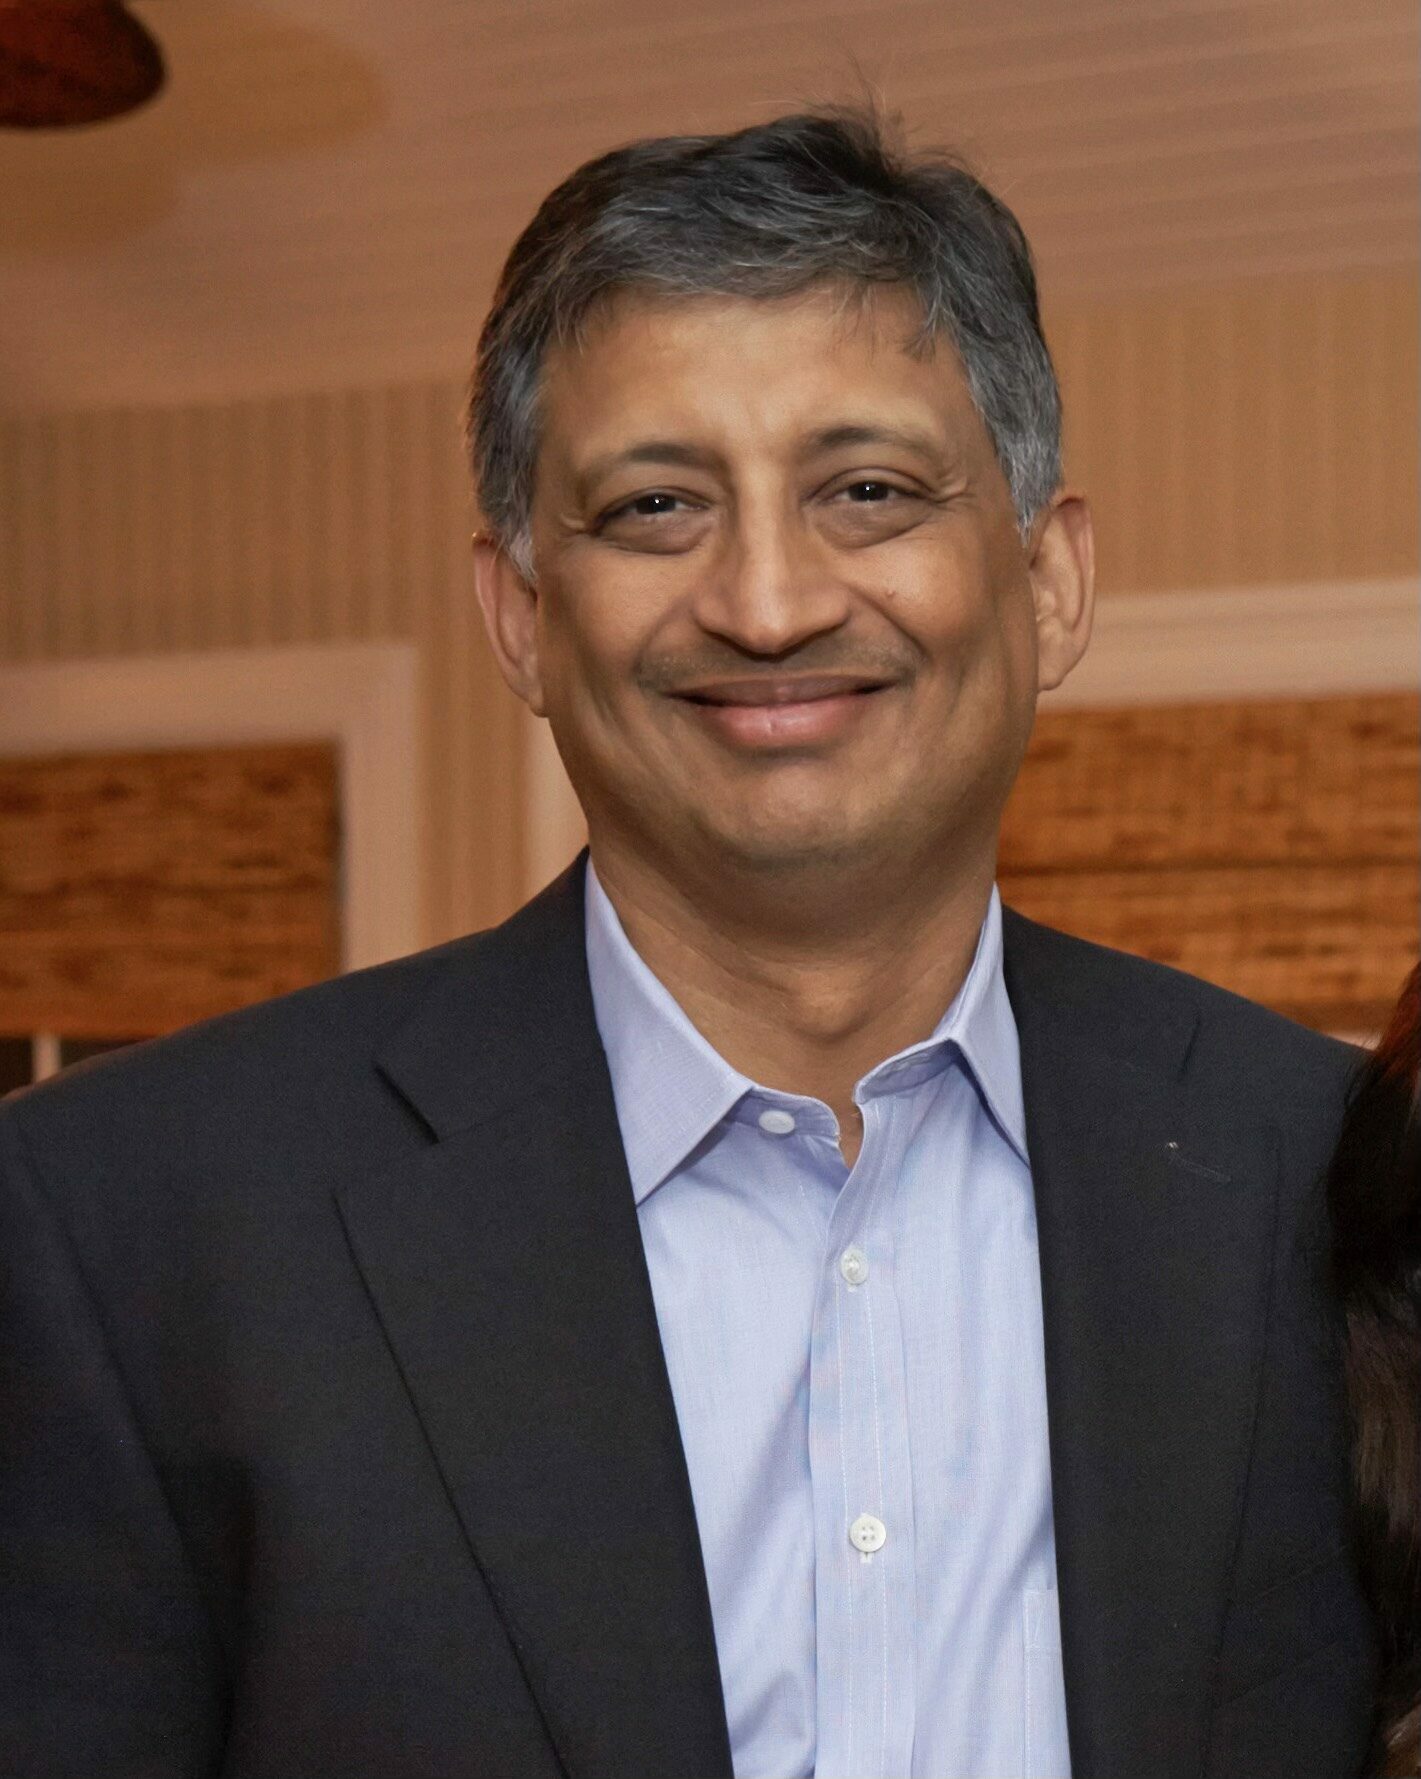 Vinit Bodas President, Managing Partner and CIO of Deccan Value